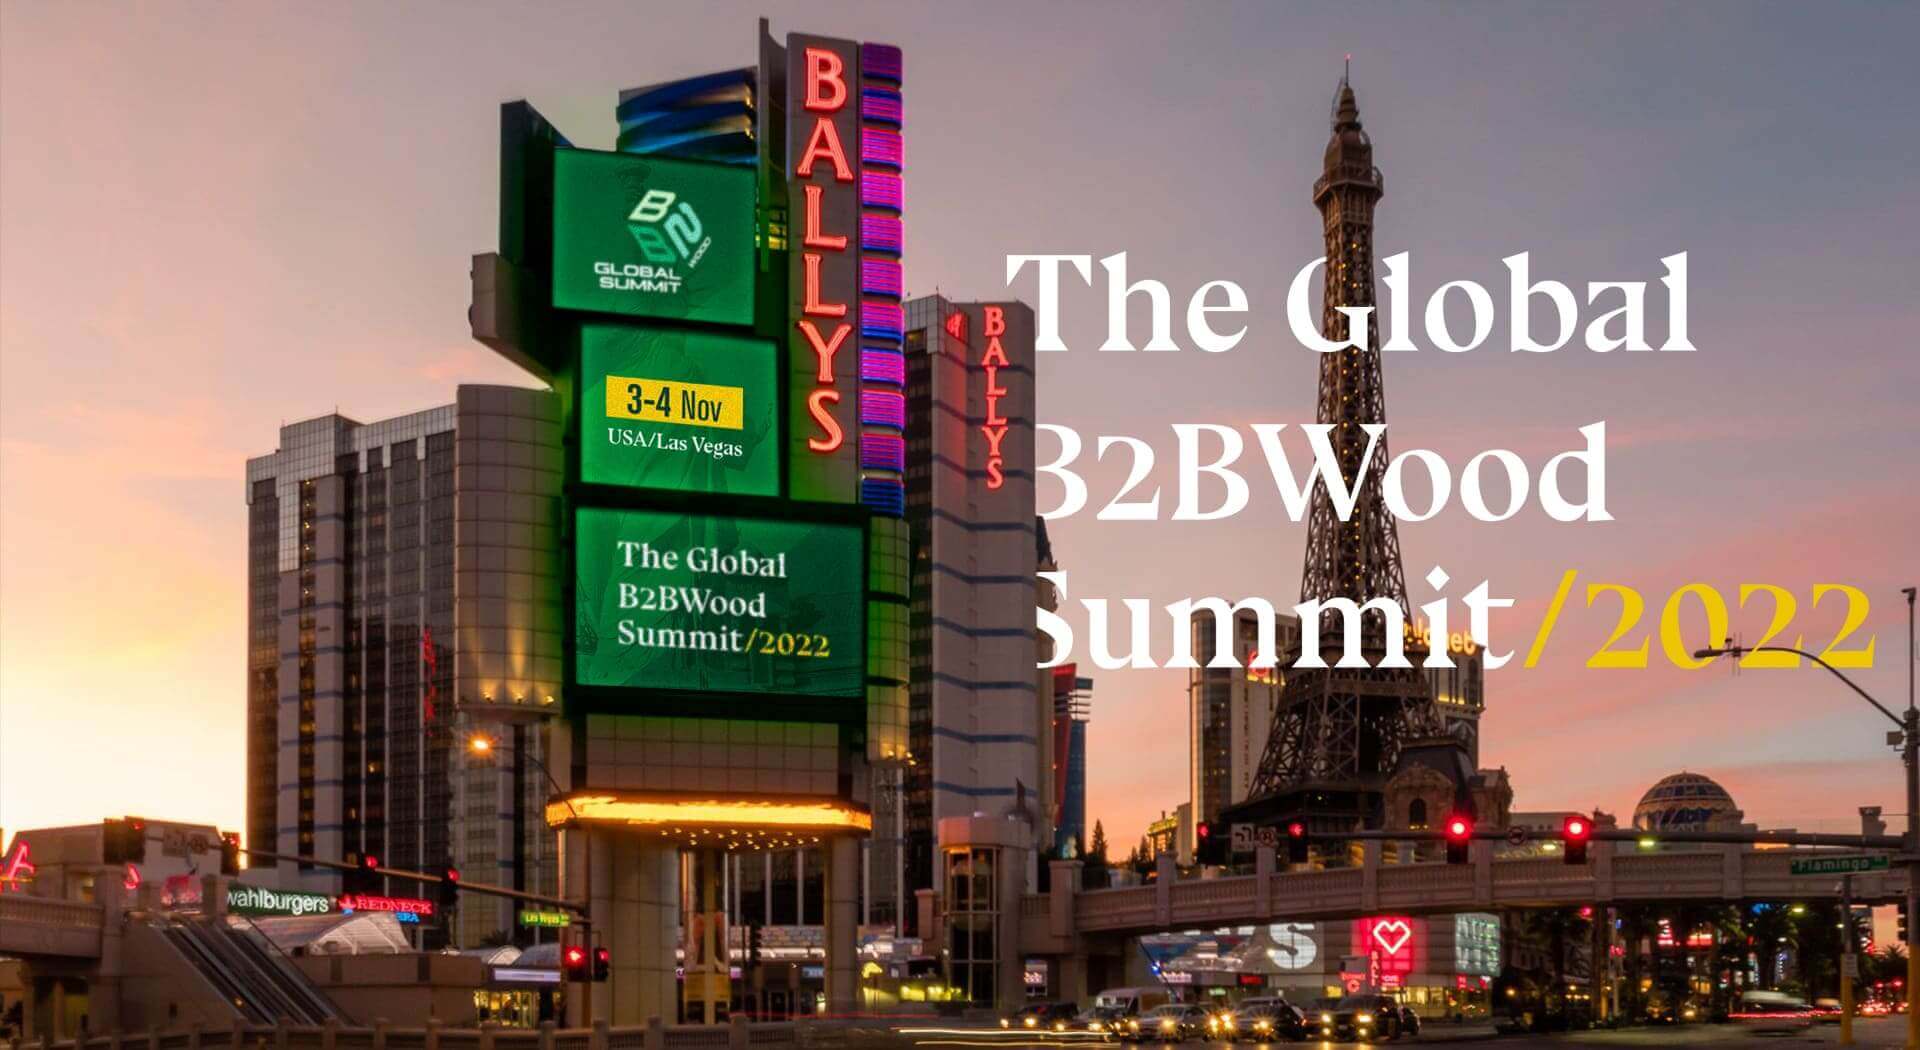 Wood summit ads on screen